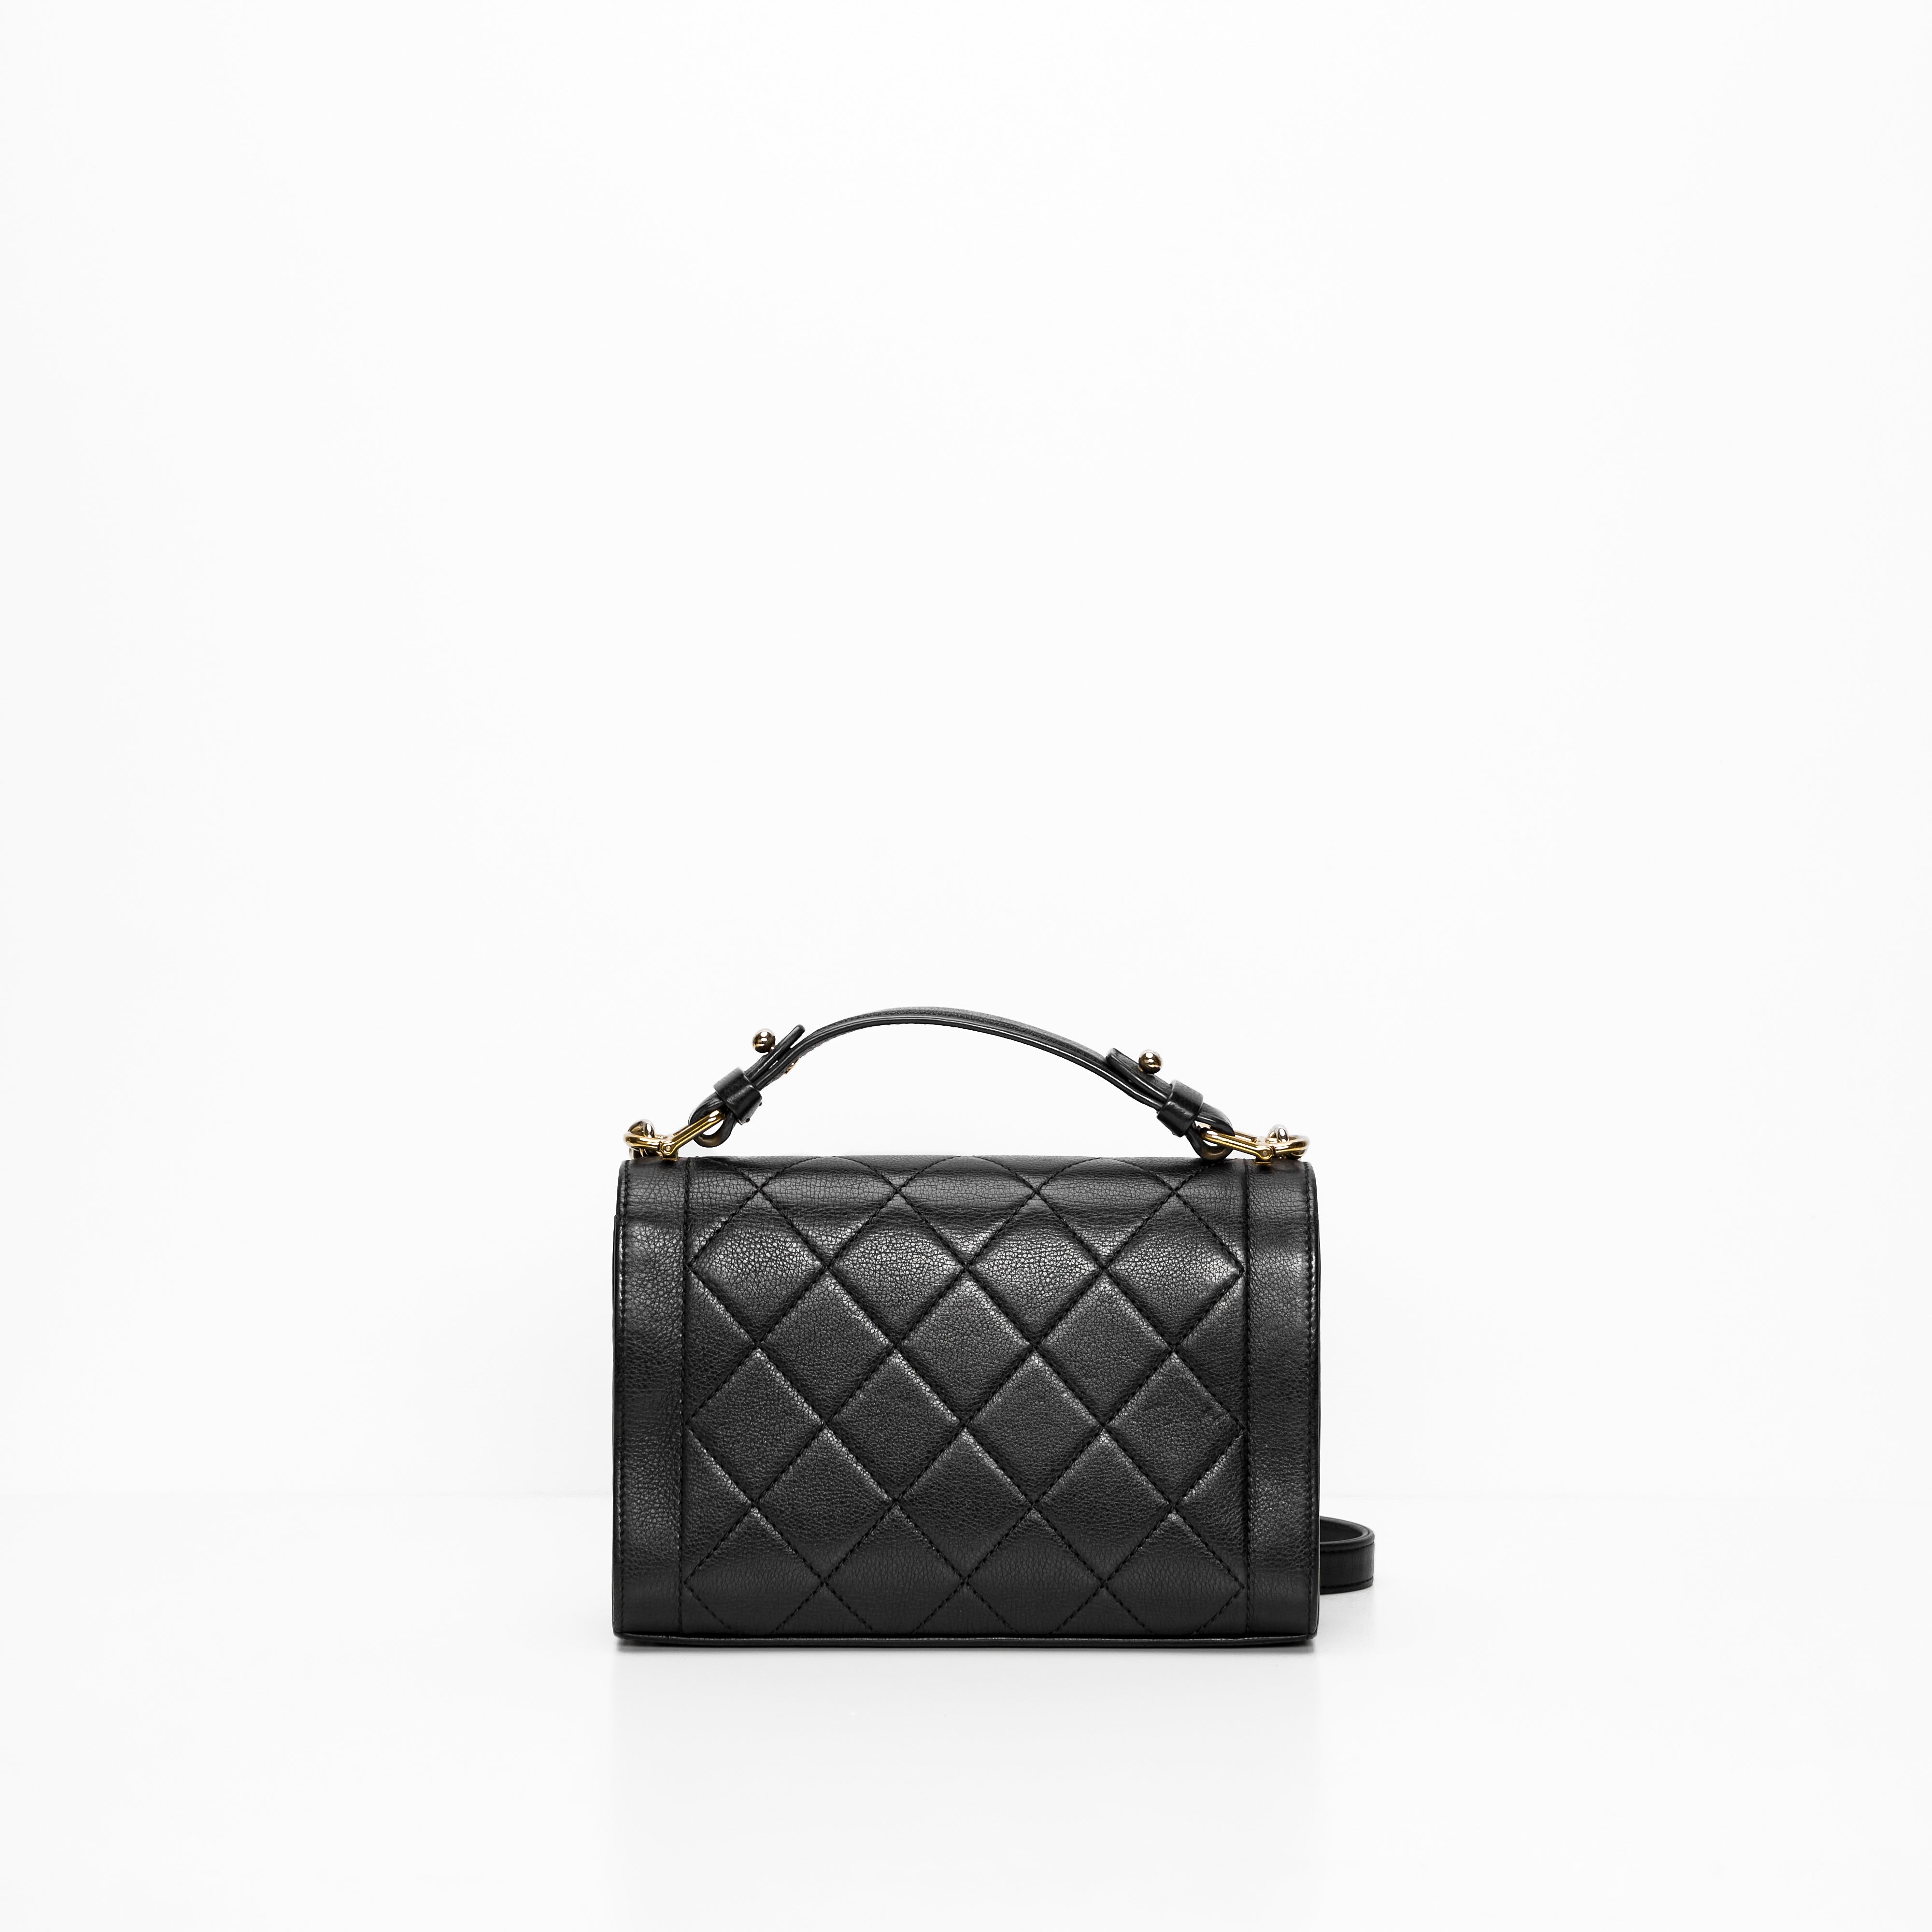 Chanel Label Click Bag